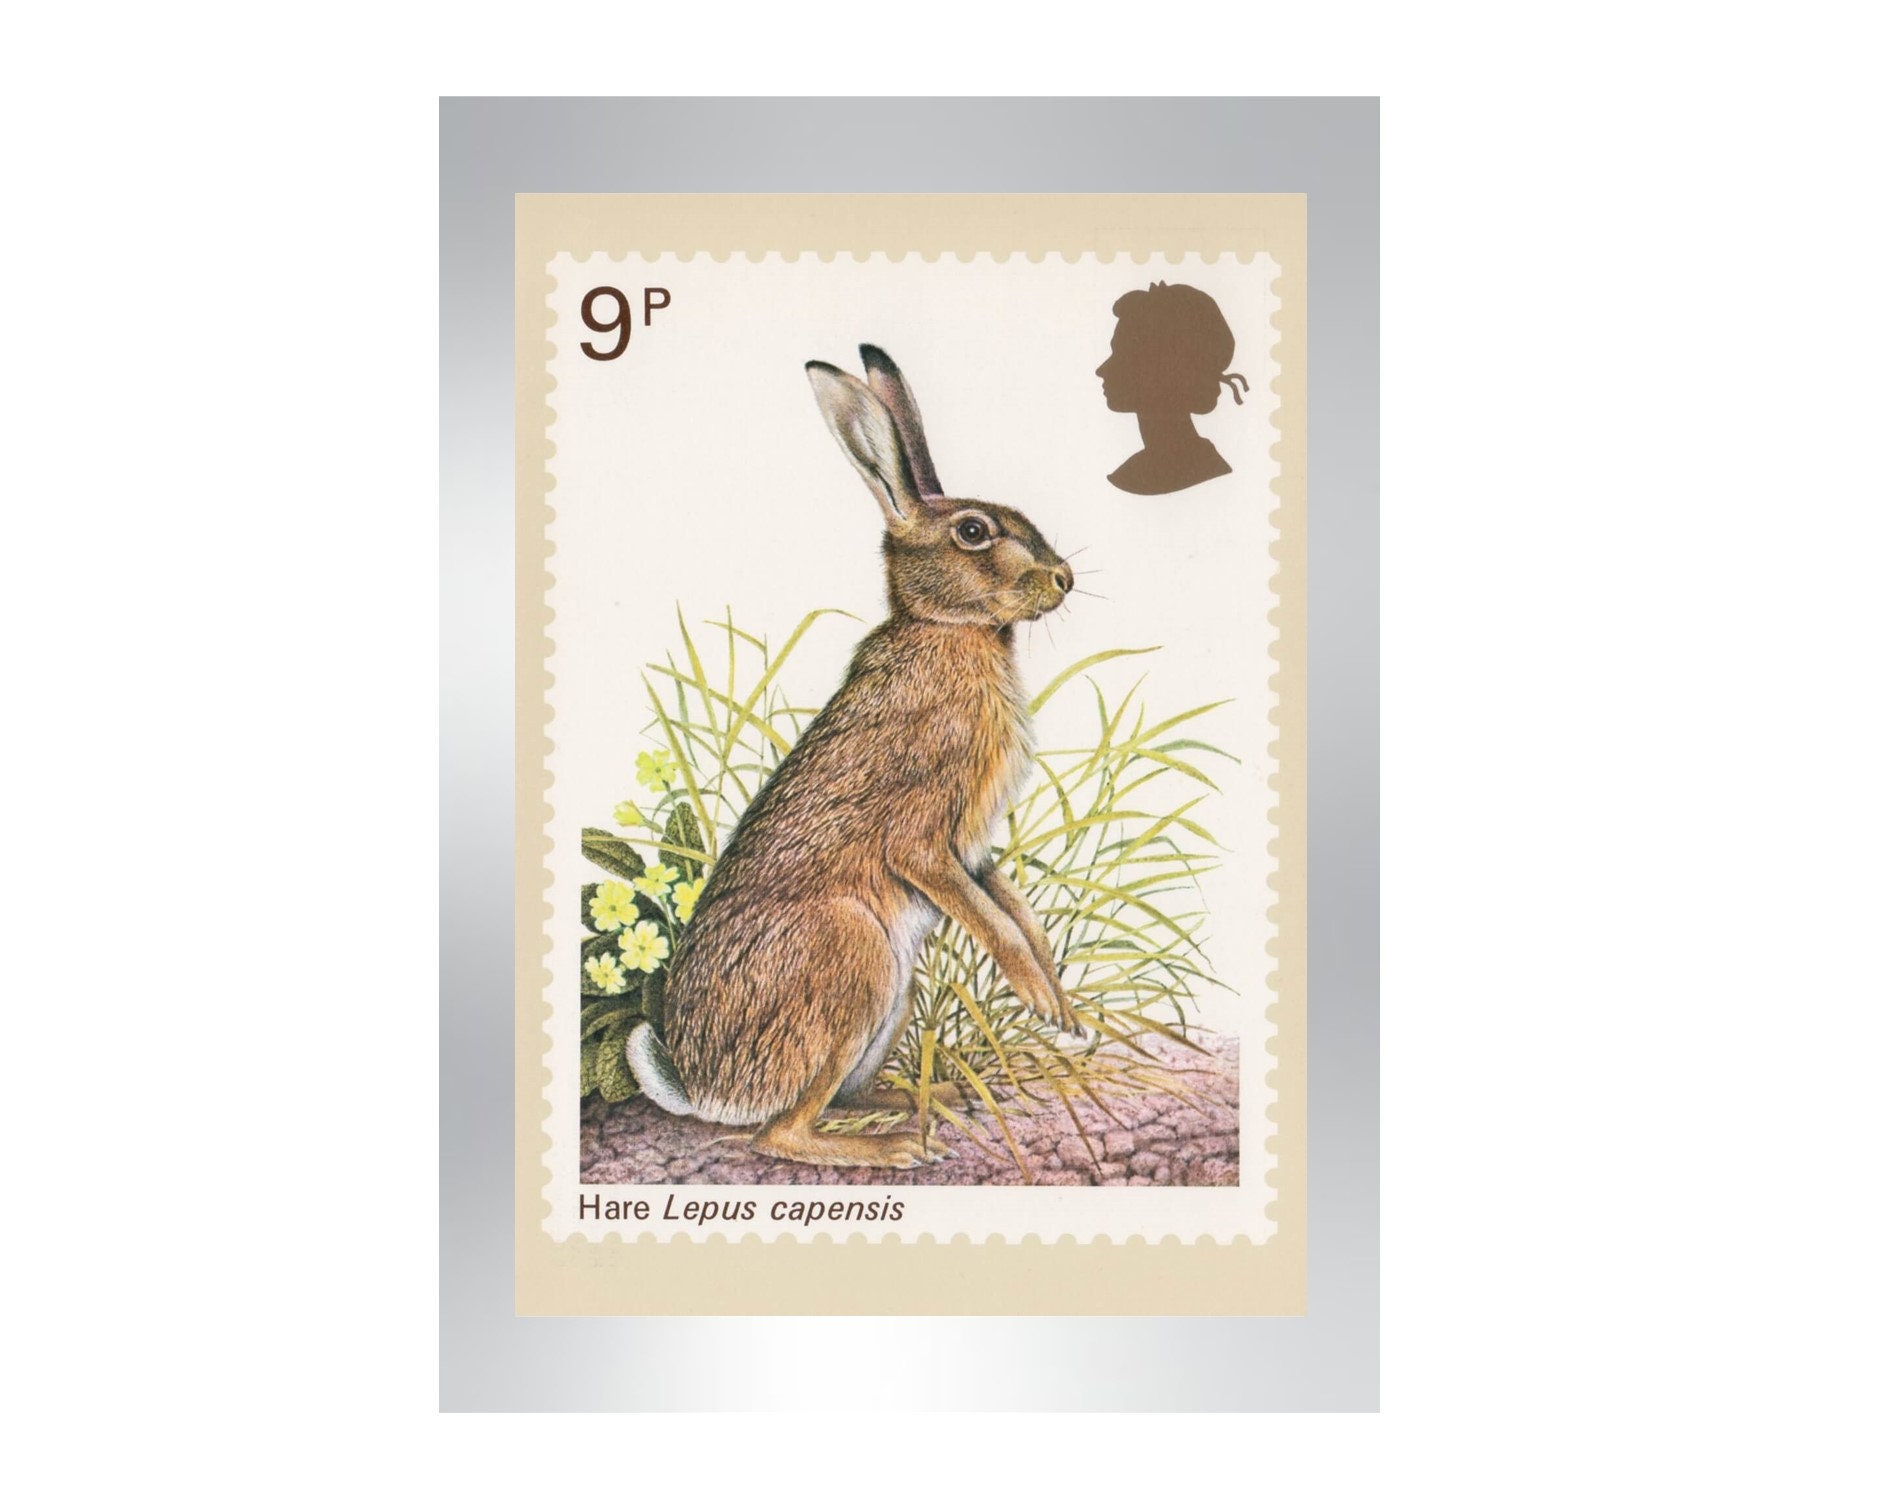 Woodland Wildlife Postage Stamp Set Retro Wild Animal Illustrations on  Vintage Romania European Postal Stamps Rabbit Squirrel Fox Hare 